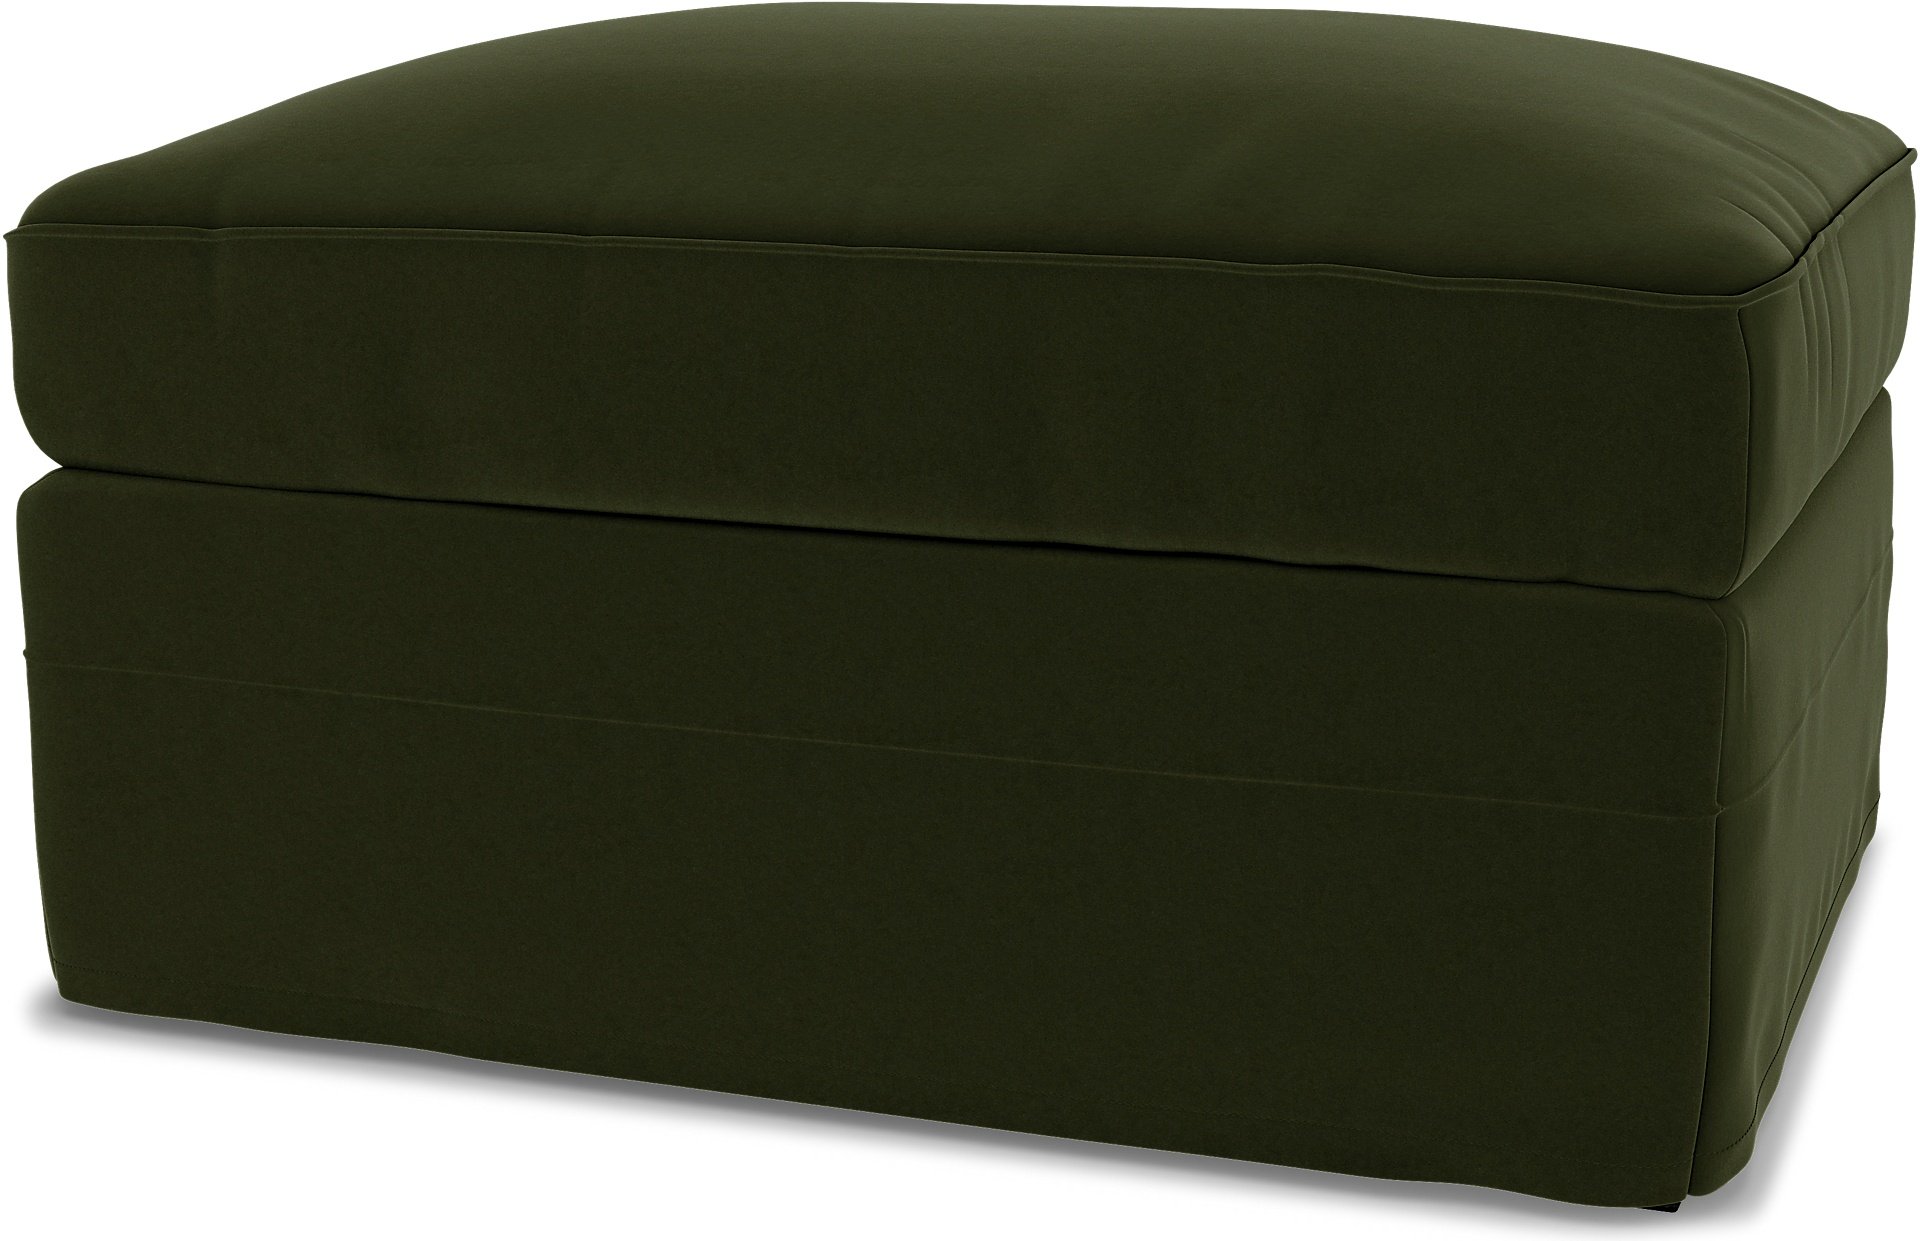 IKEA - Gronlid Footstool with Storage Cover, Moss, Velvet - Bemz